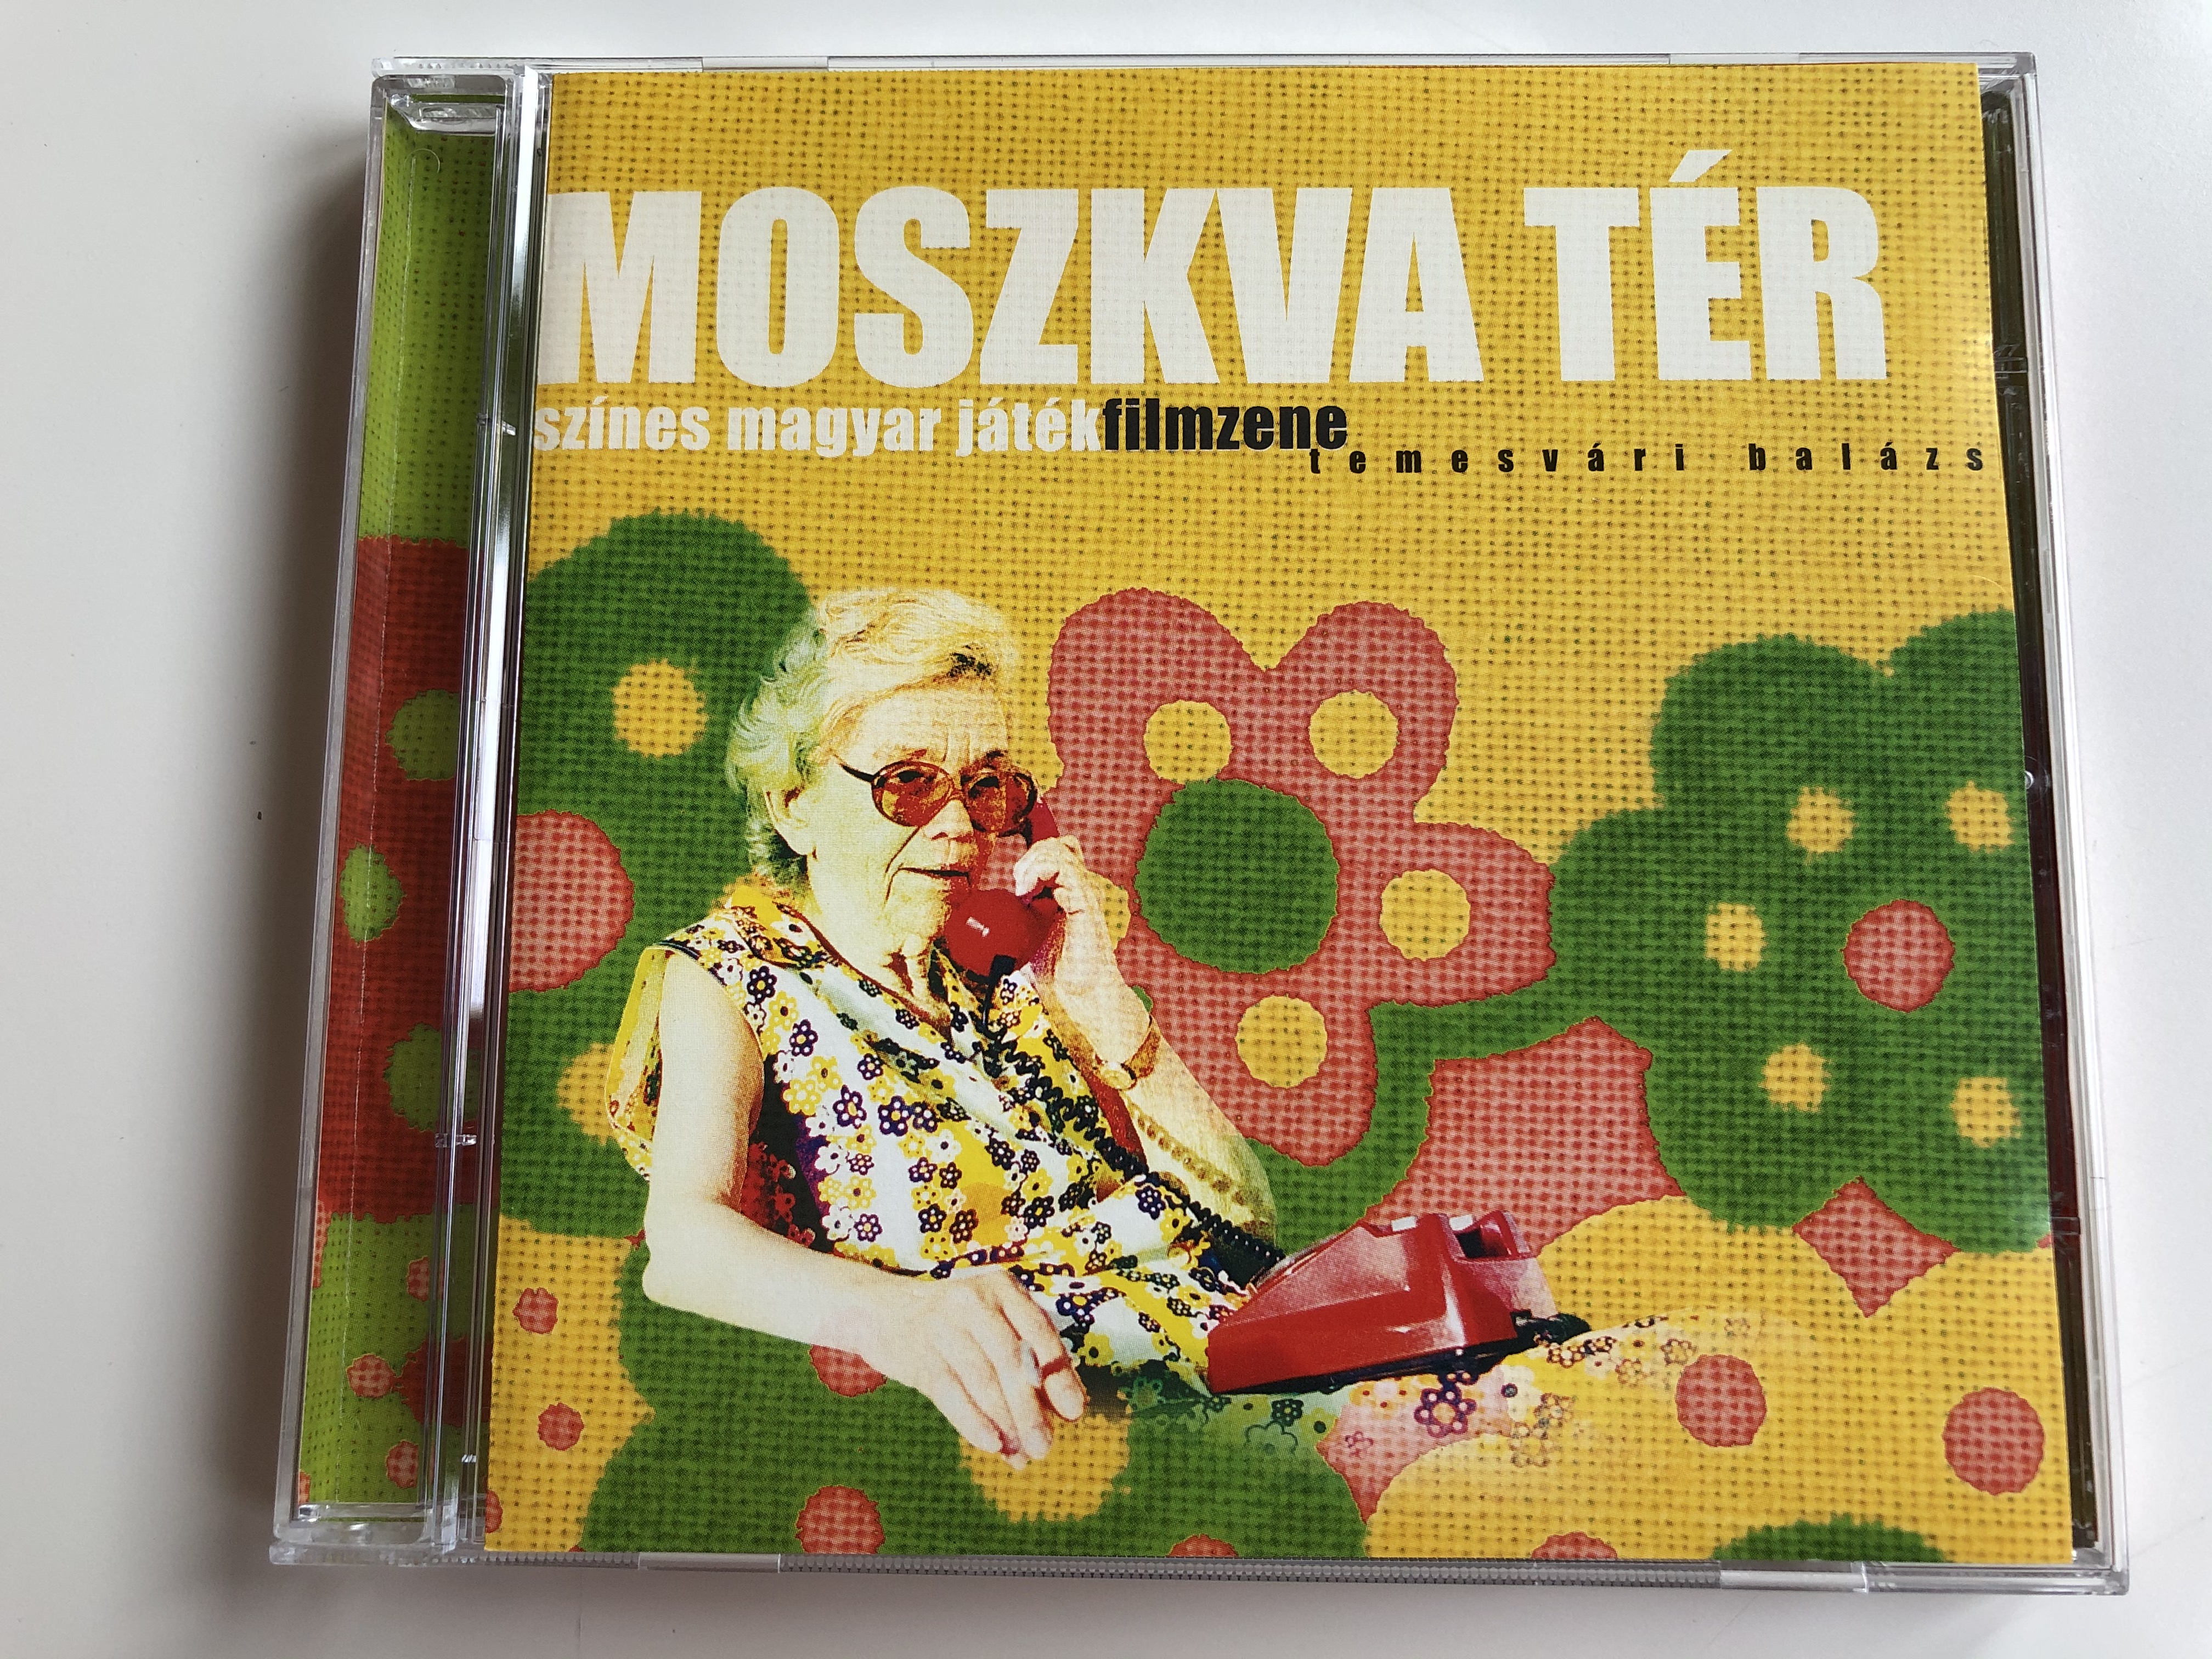 moszkva-ter-szines-magyar-jatek-filmzene-temesv-ri-bal-zs-bahia-music-audio-cd-2001-cdb-078-1-.jpg